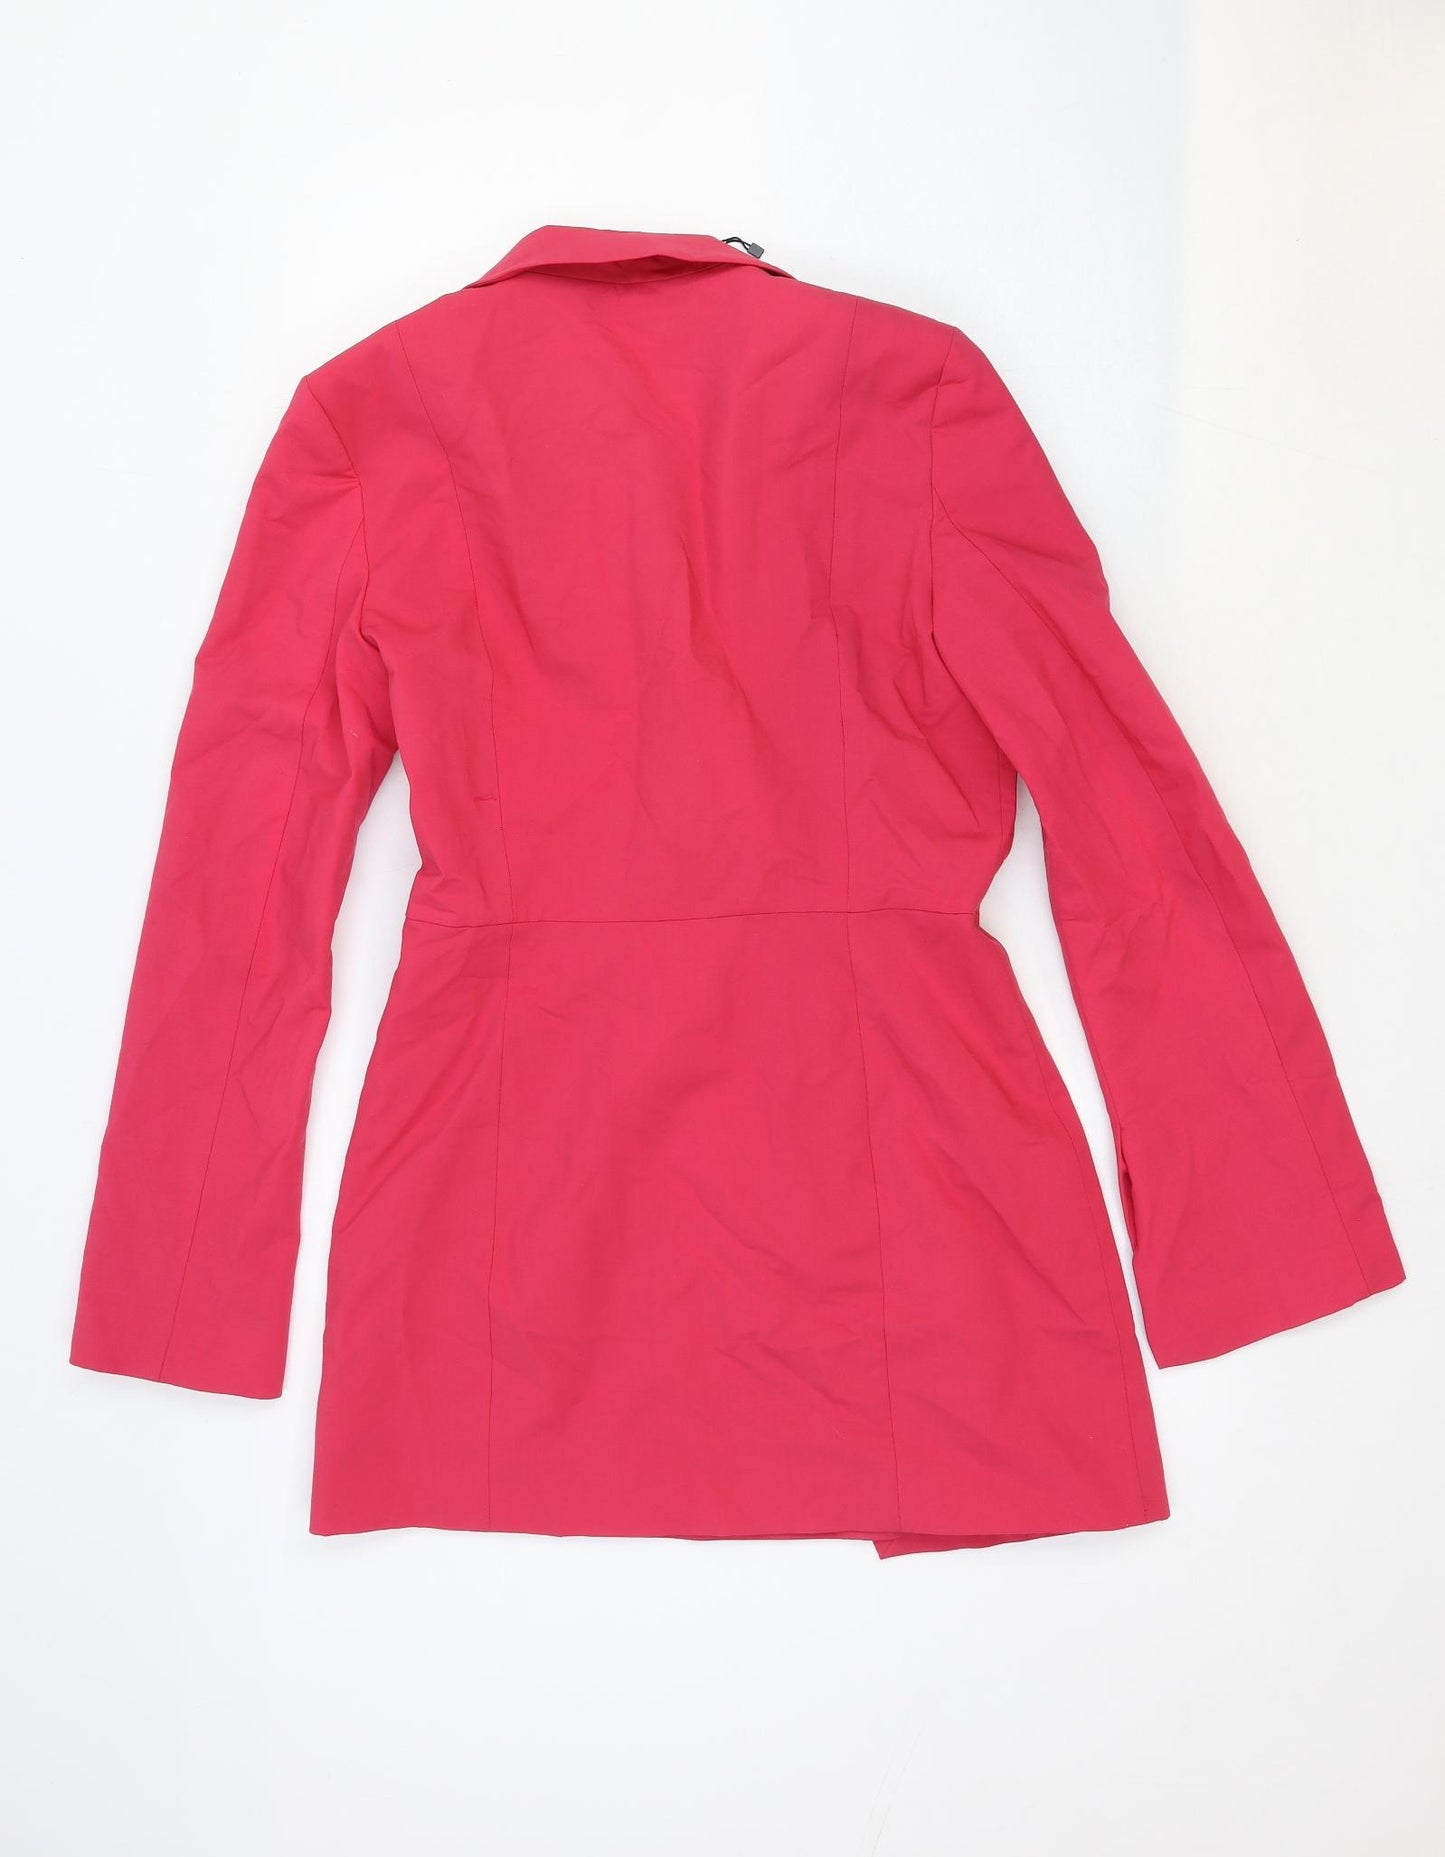 Zara Womens Pink Cotton Jacket Dress Size M Collared Zip - Cut Out